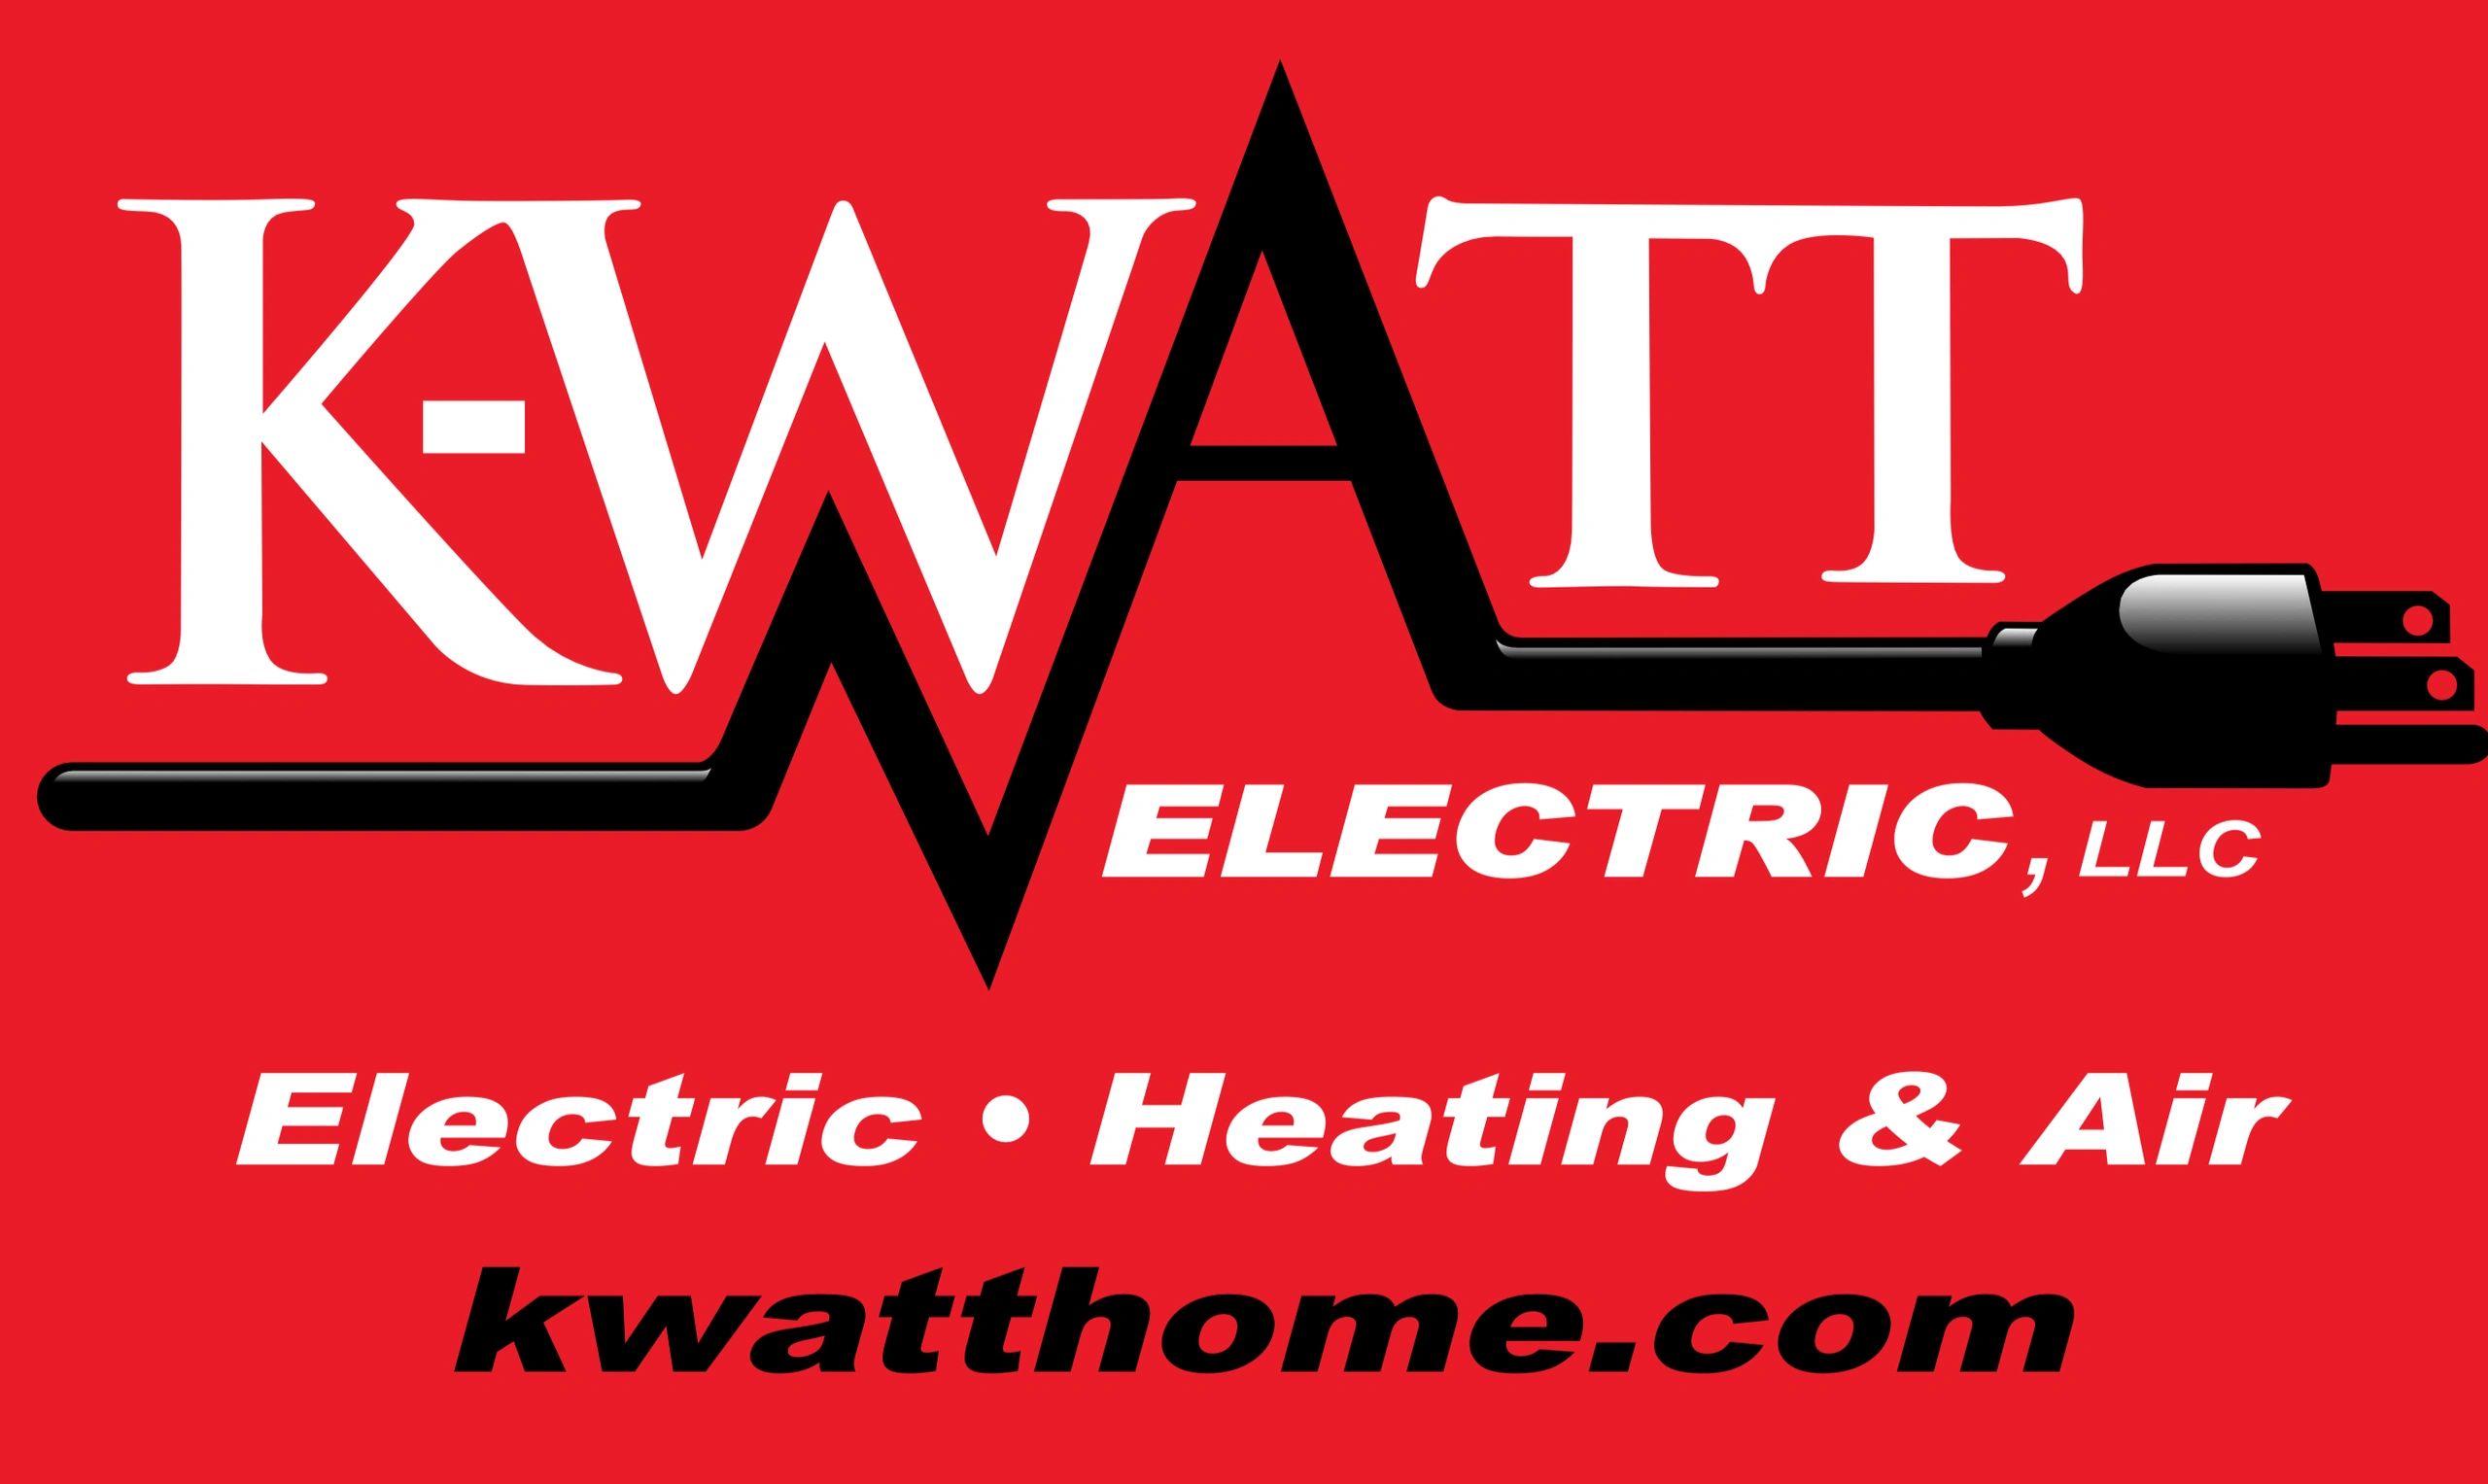 KWATT Electric, LLC